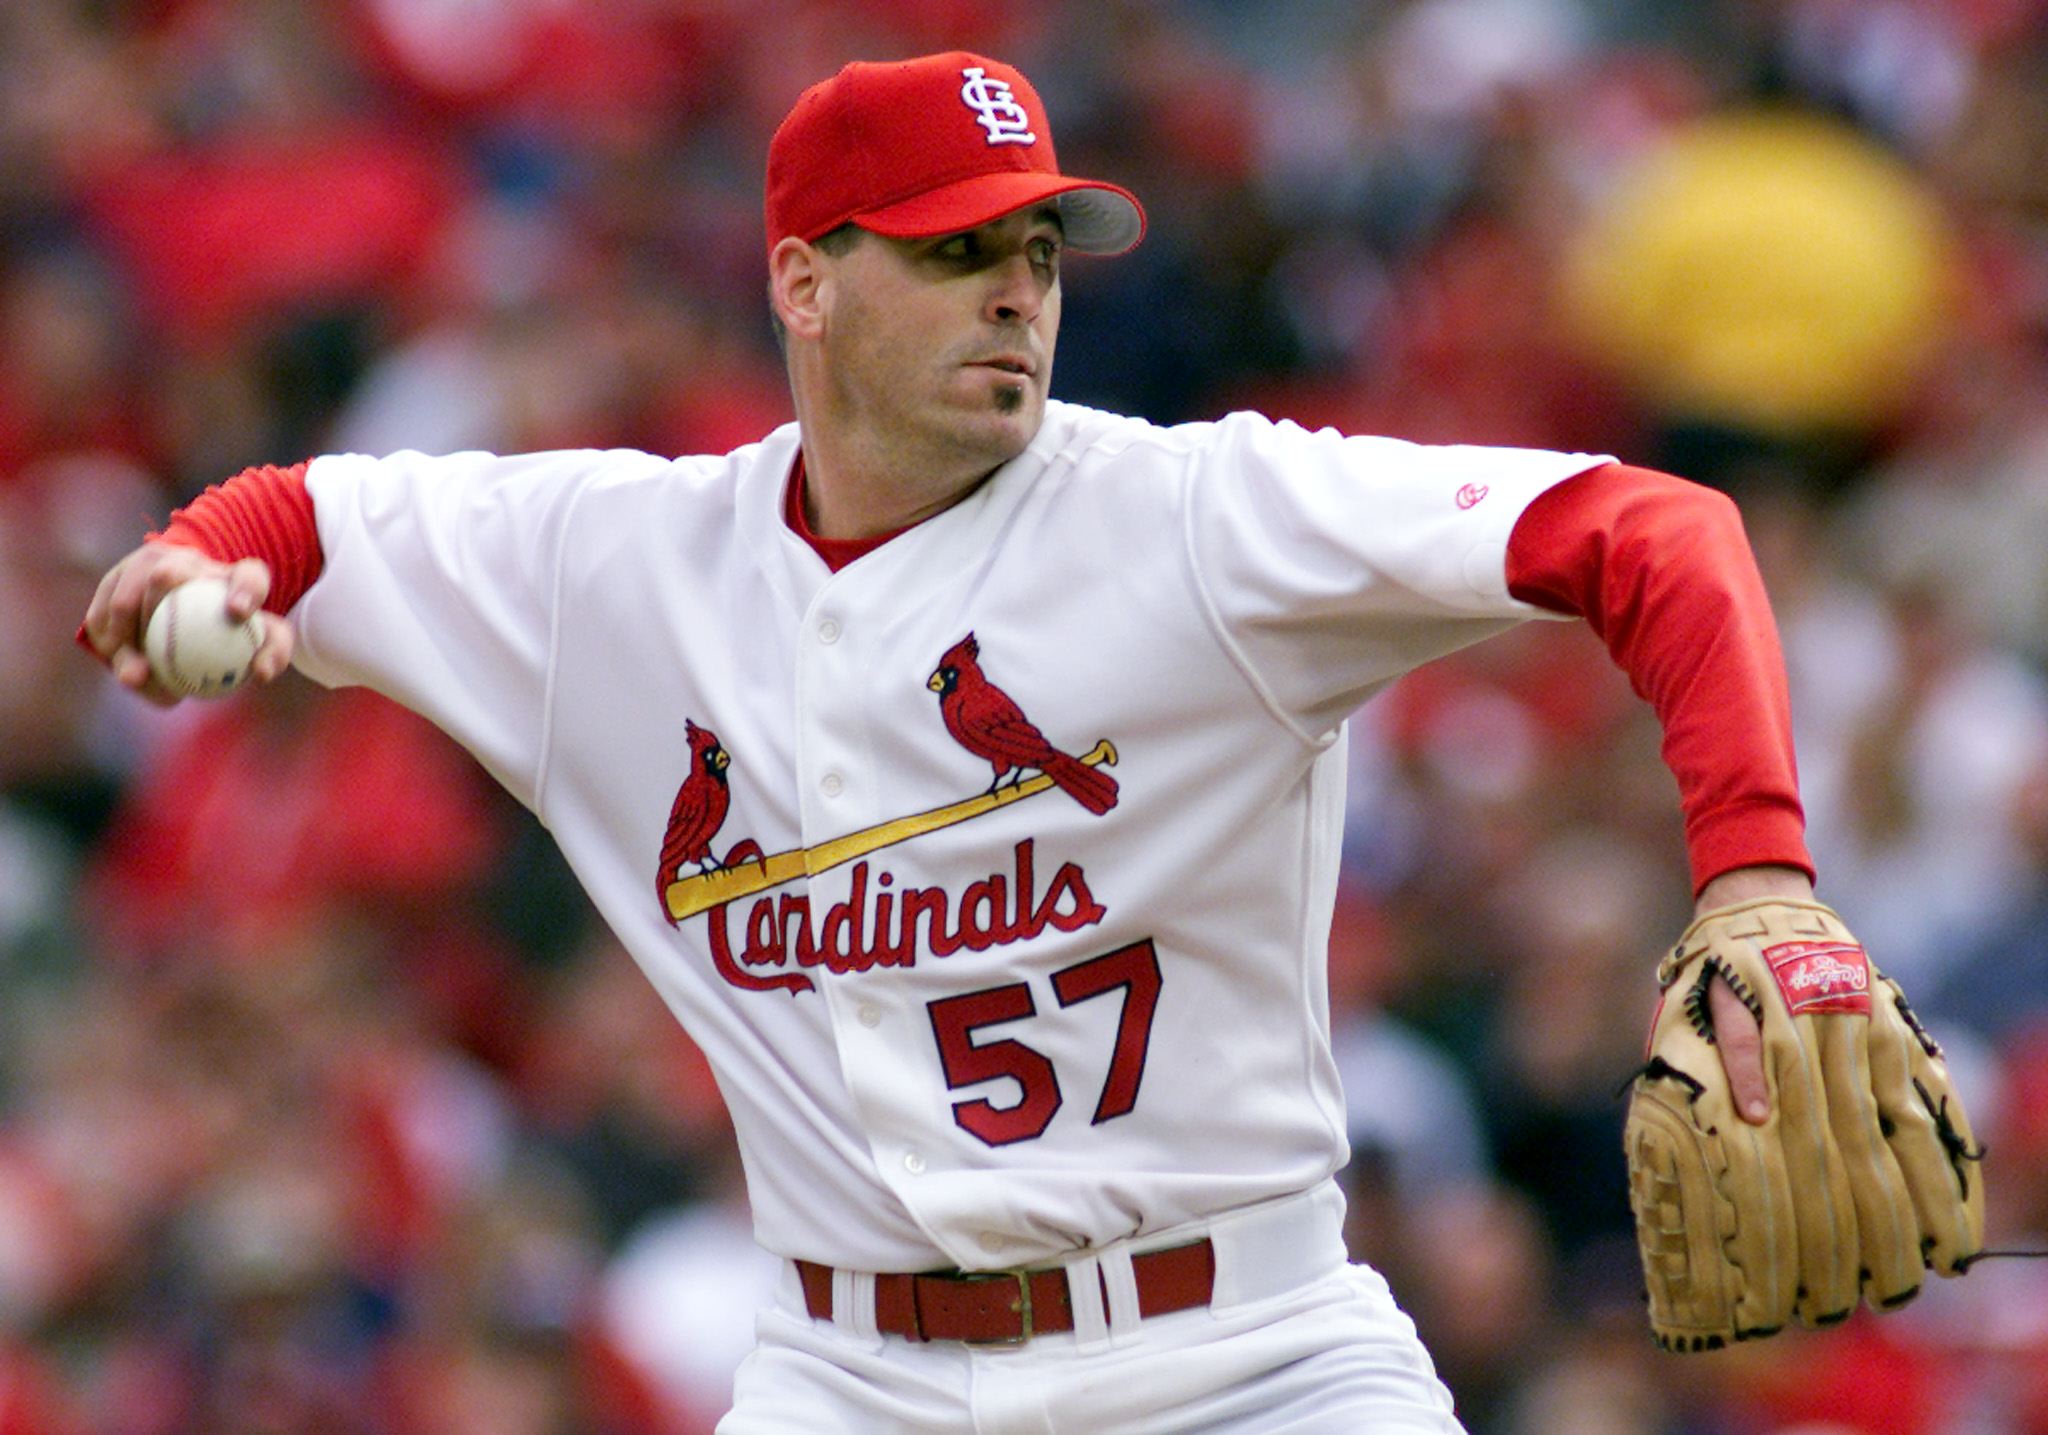 The Tragic Death of Cardinals Pitcher Darryl Kile Stunned the Baseball World